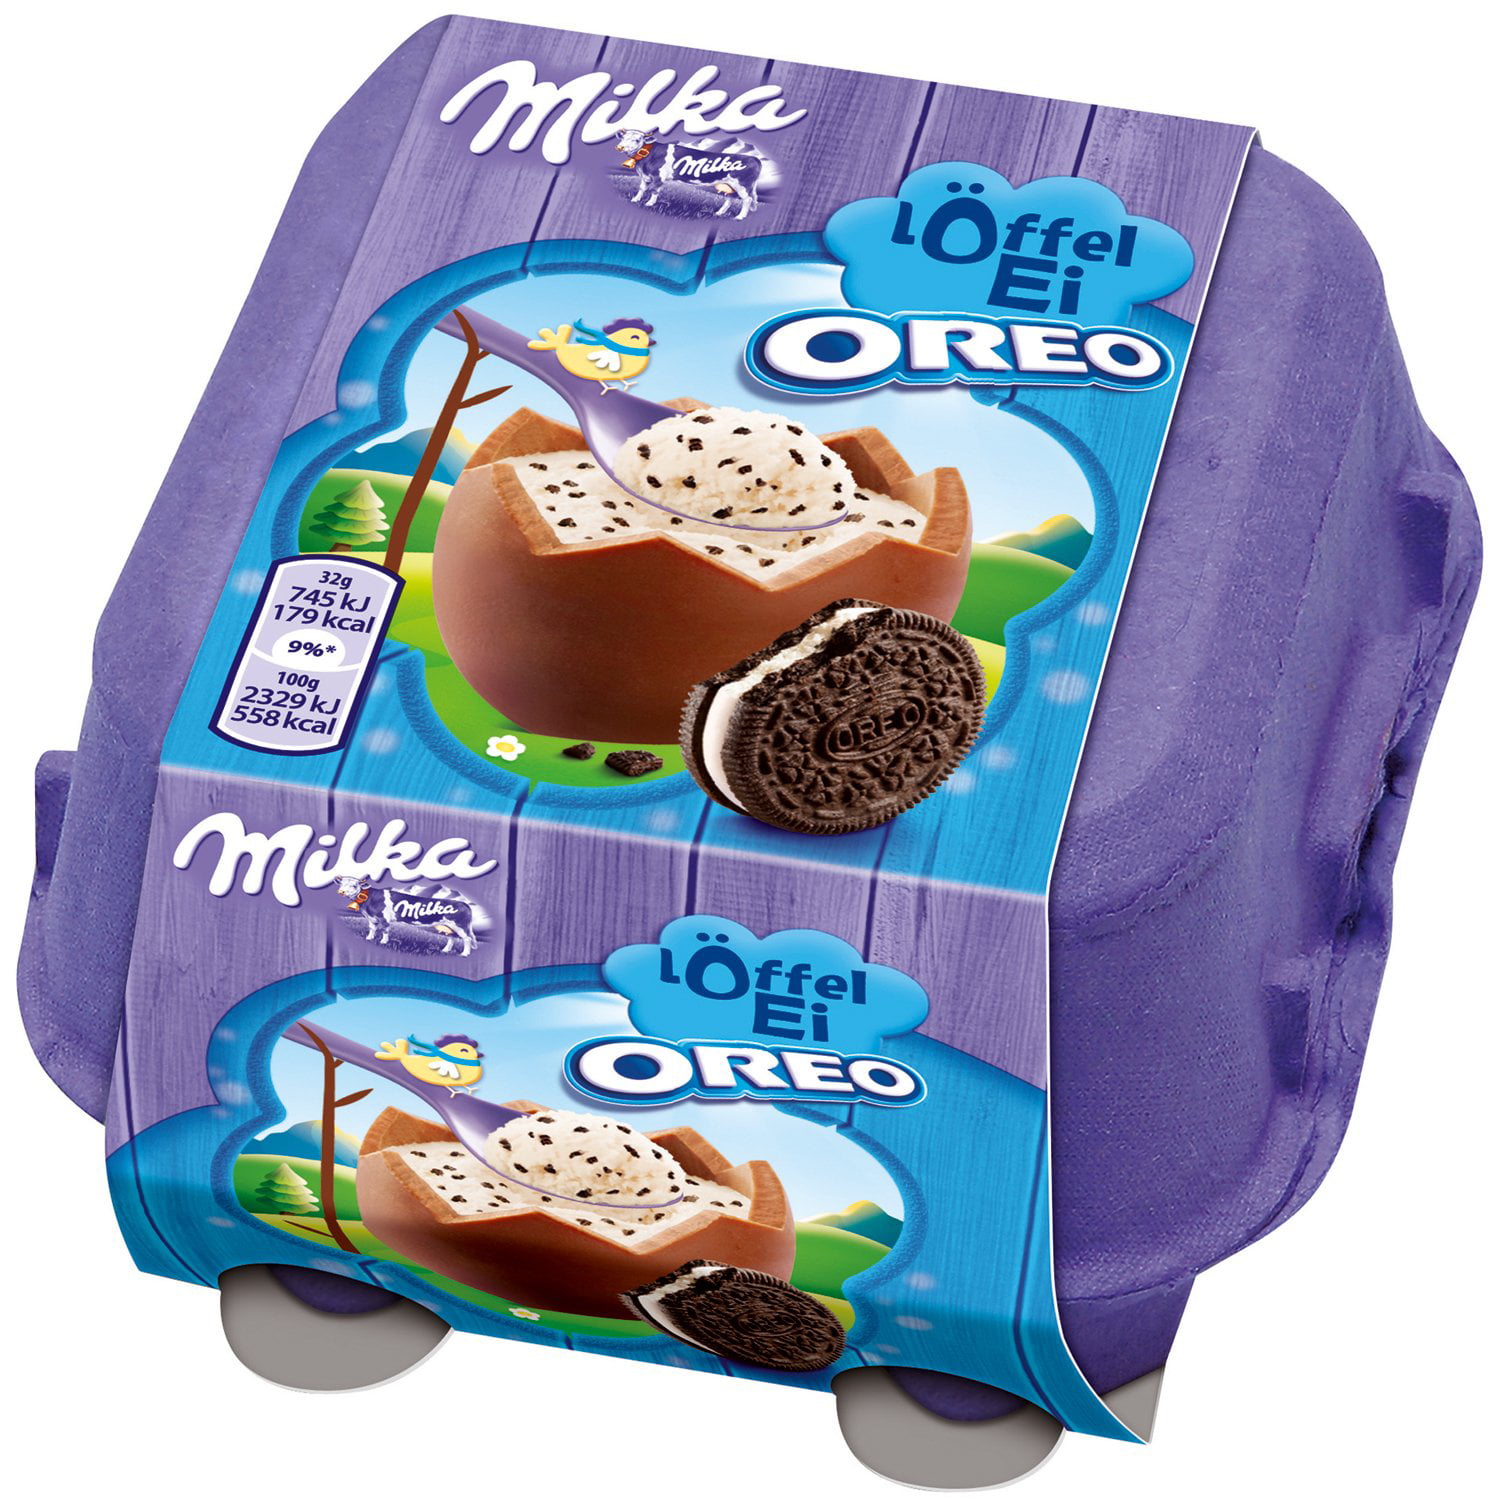 Milka - Loeffel Ei Oreo Chocolate Eggs 128g (Four 32g each) - Walmart.com